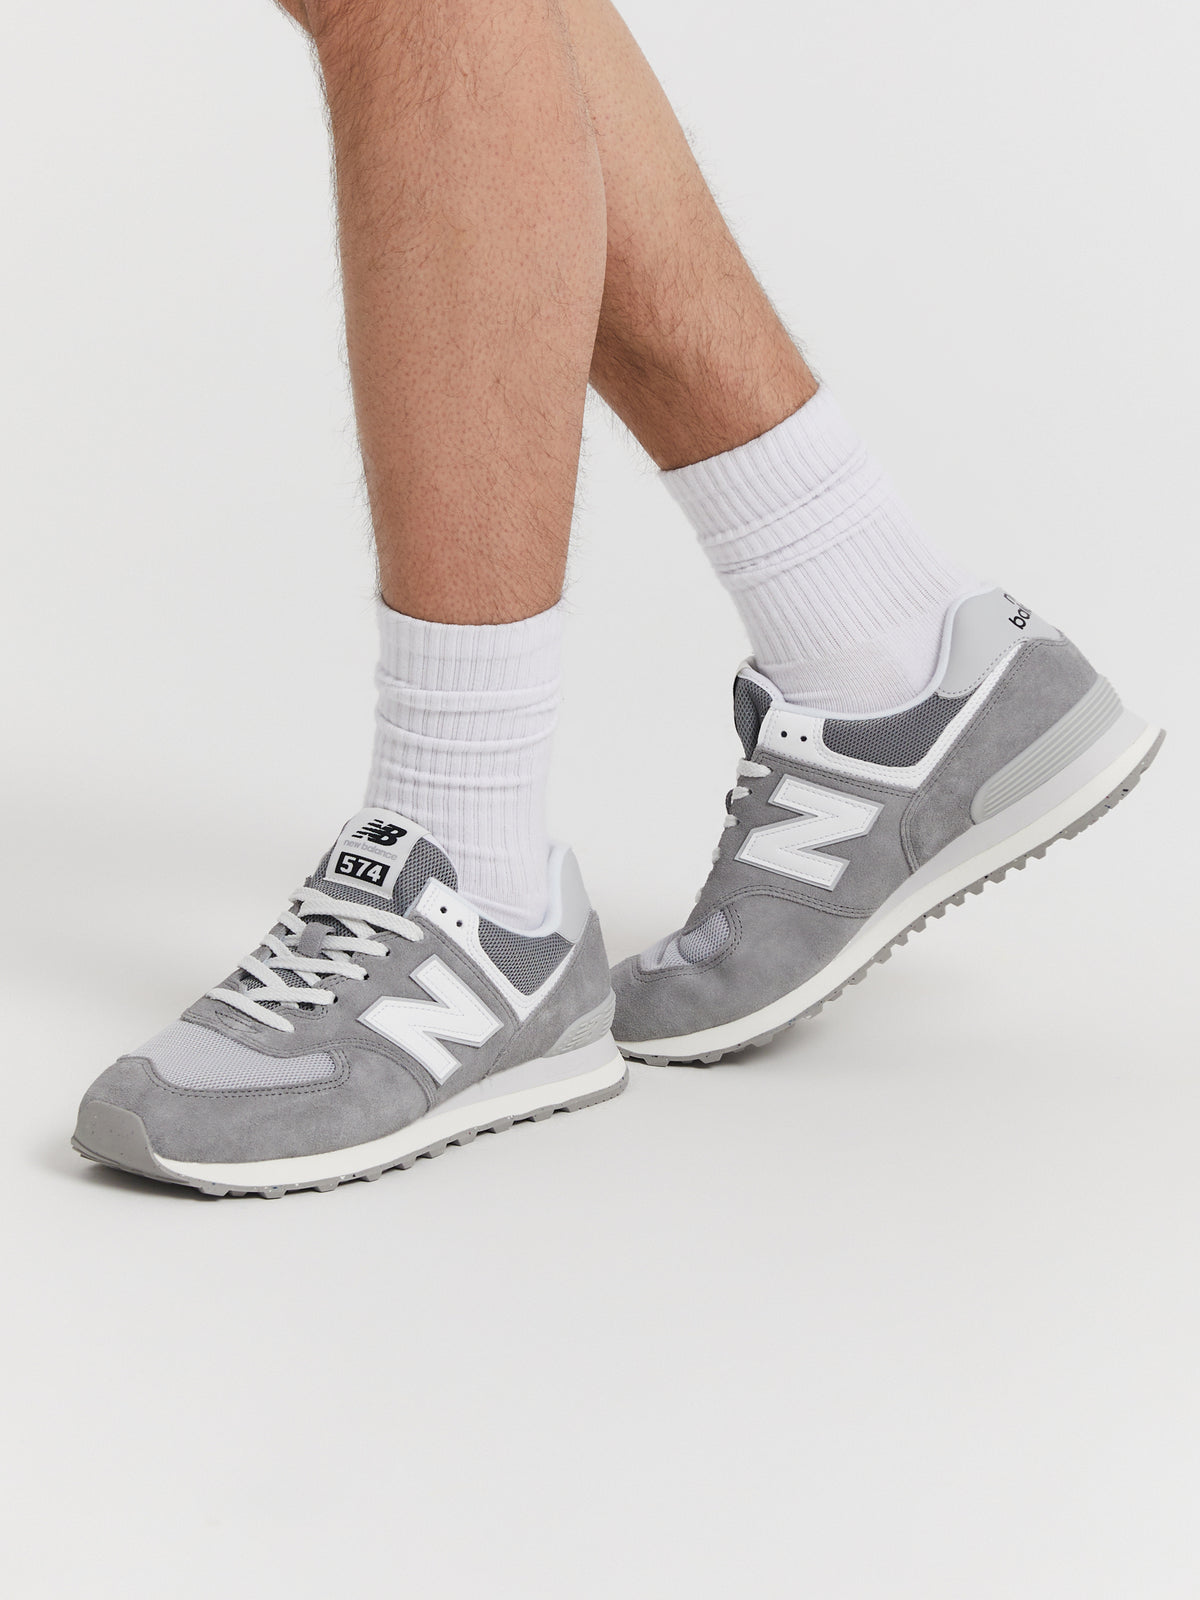 Unisex 574 Sneakers in Grey